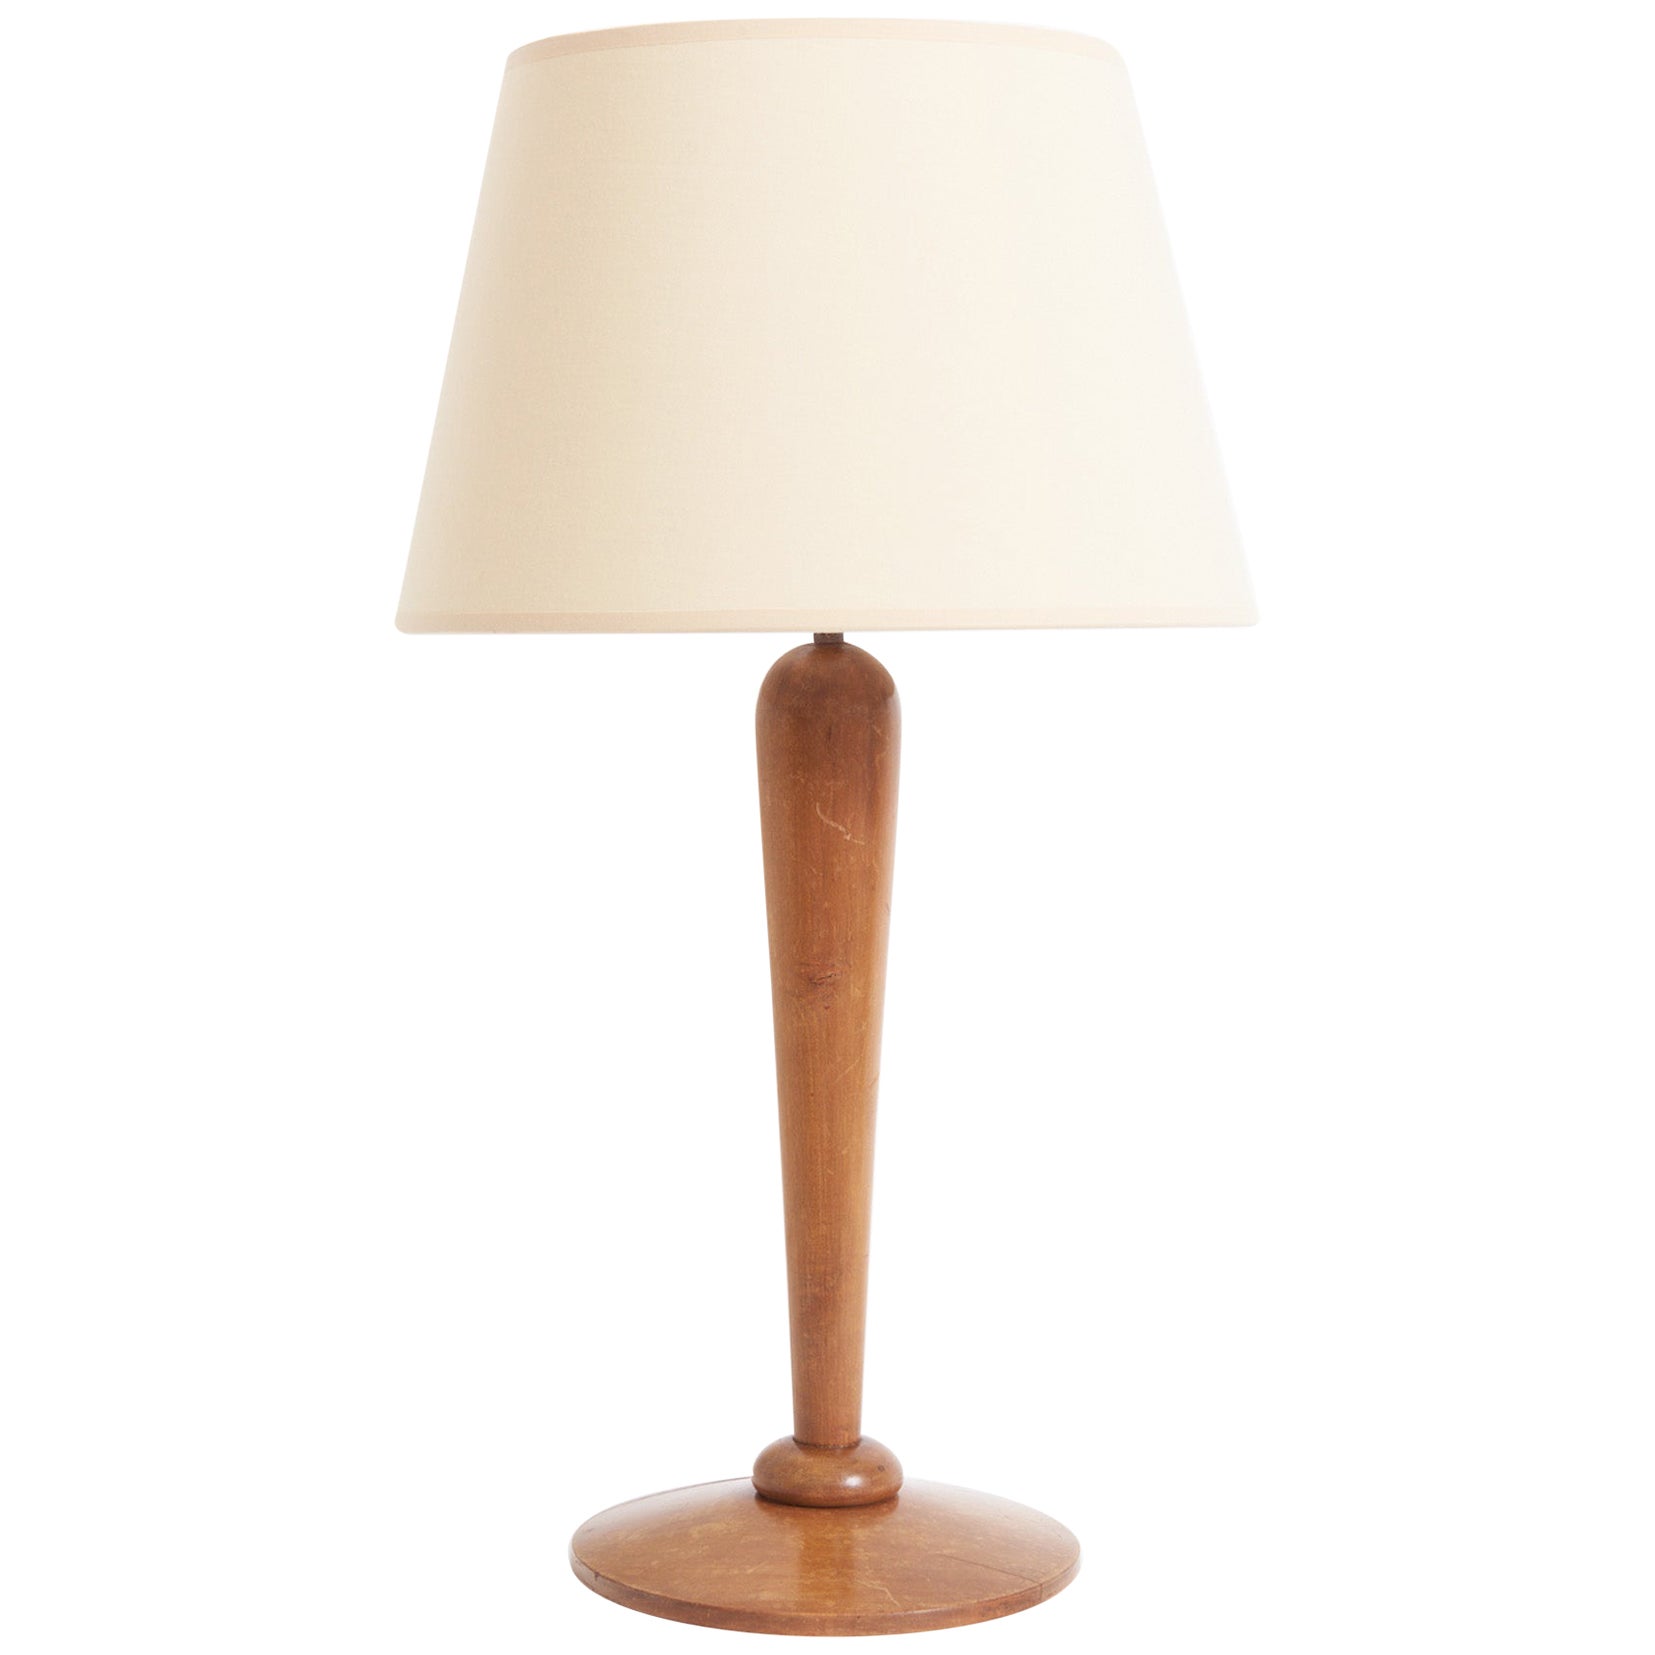 Art Deco Table Lamp